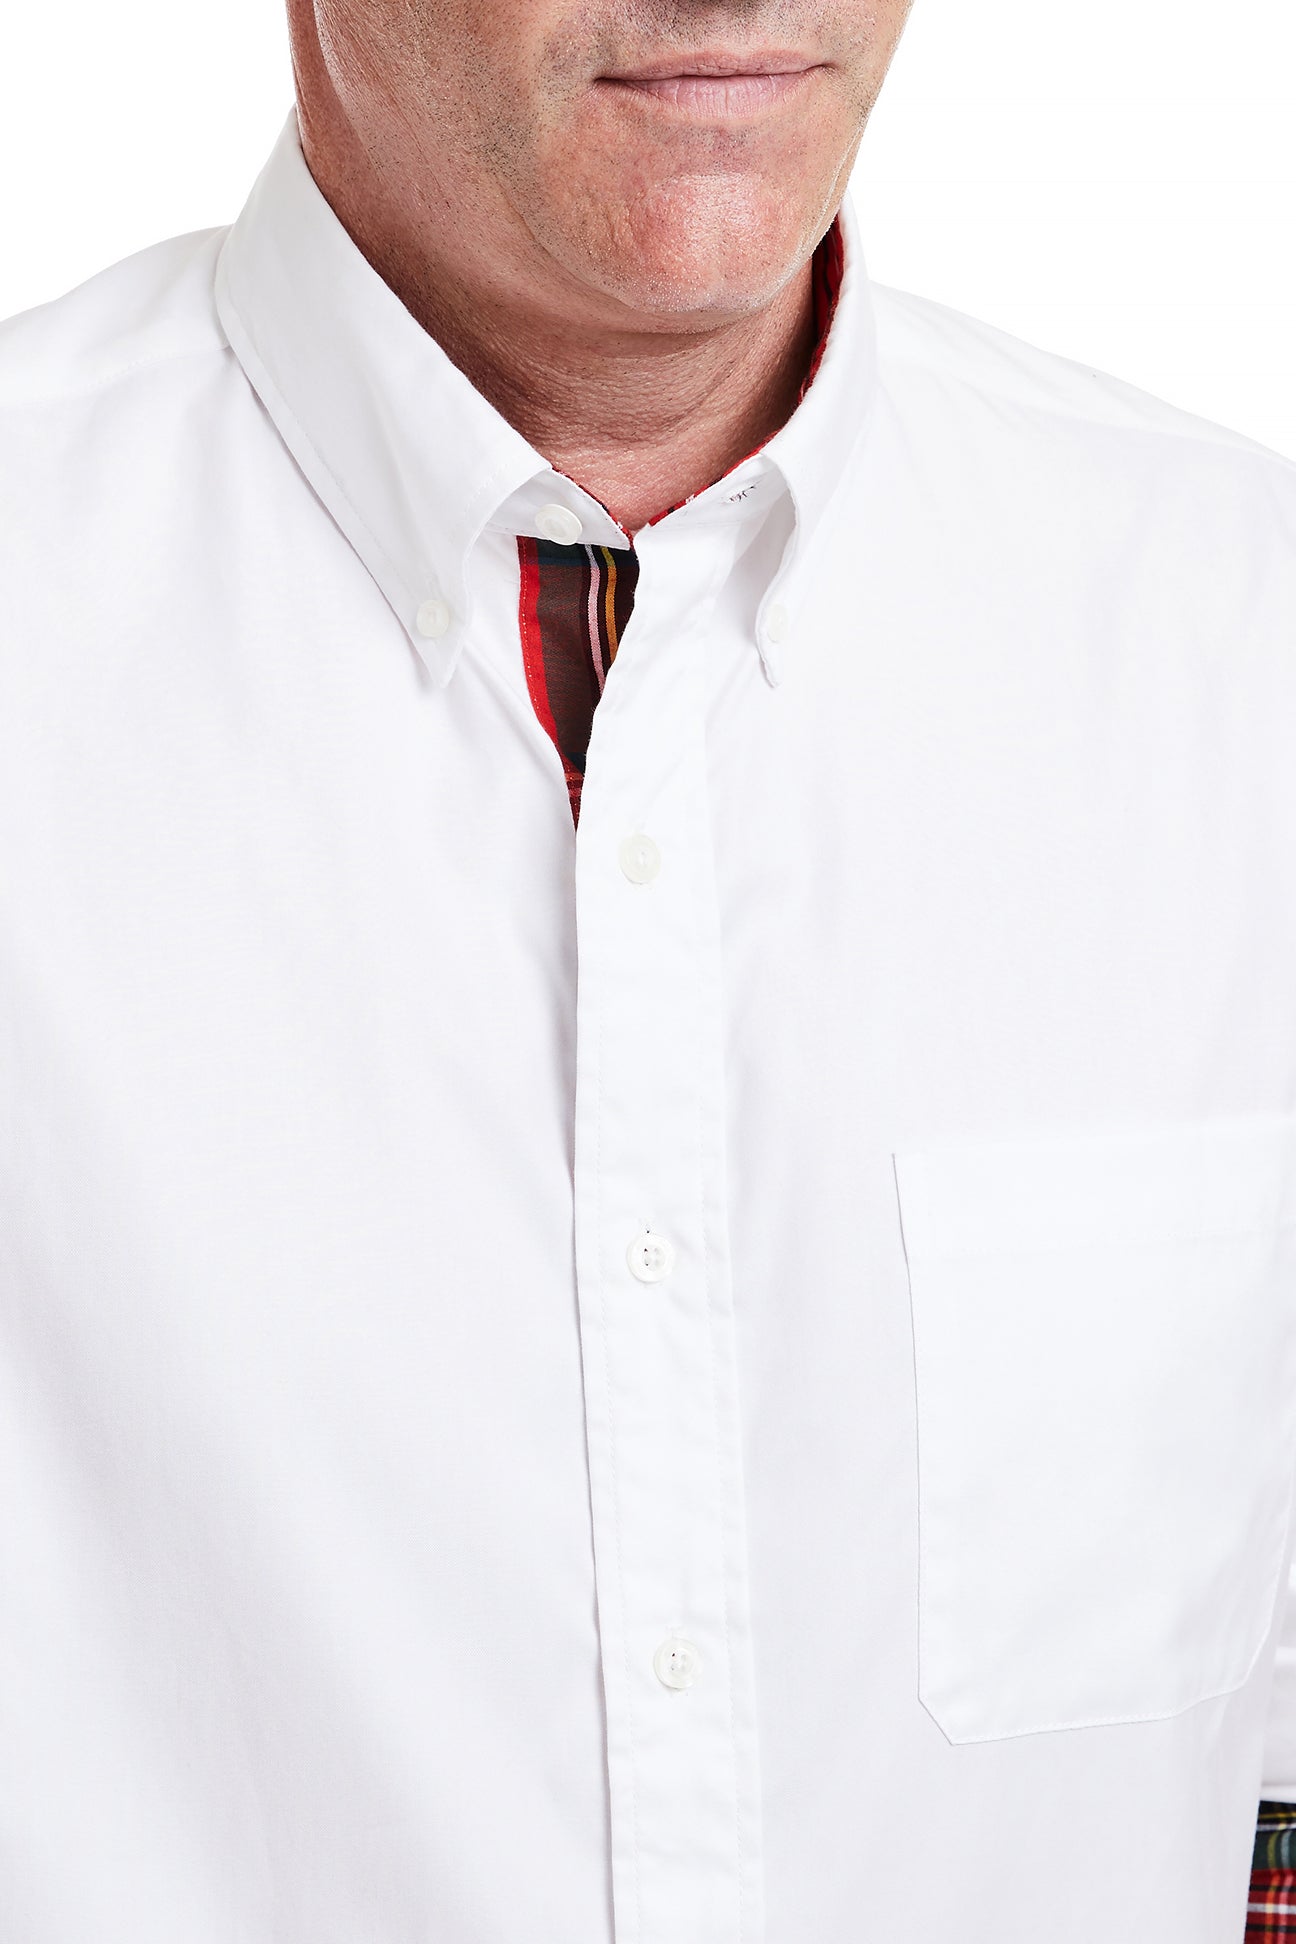 Chase Shirt White Oxford With Royal Stewart Tartan Trim MENS SPORT SHIRTS Castaway Clothing